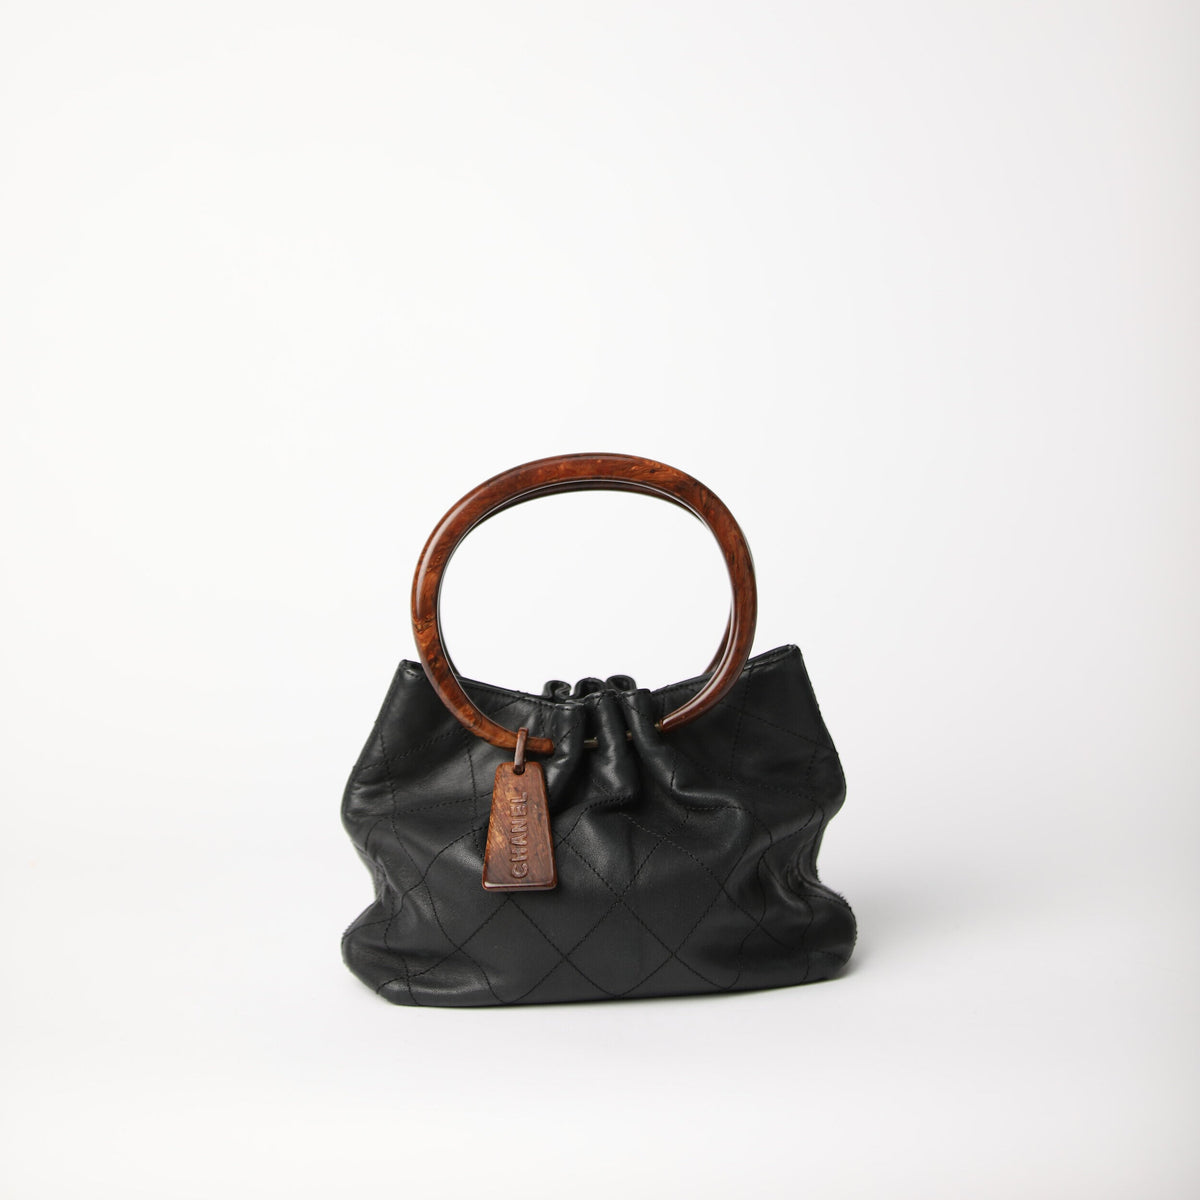 Chanel Paris CC 2005 Black Calfskin Quilted Leather Expandable PNY Maxi  Flap Bag